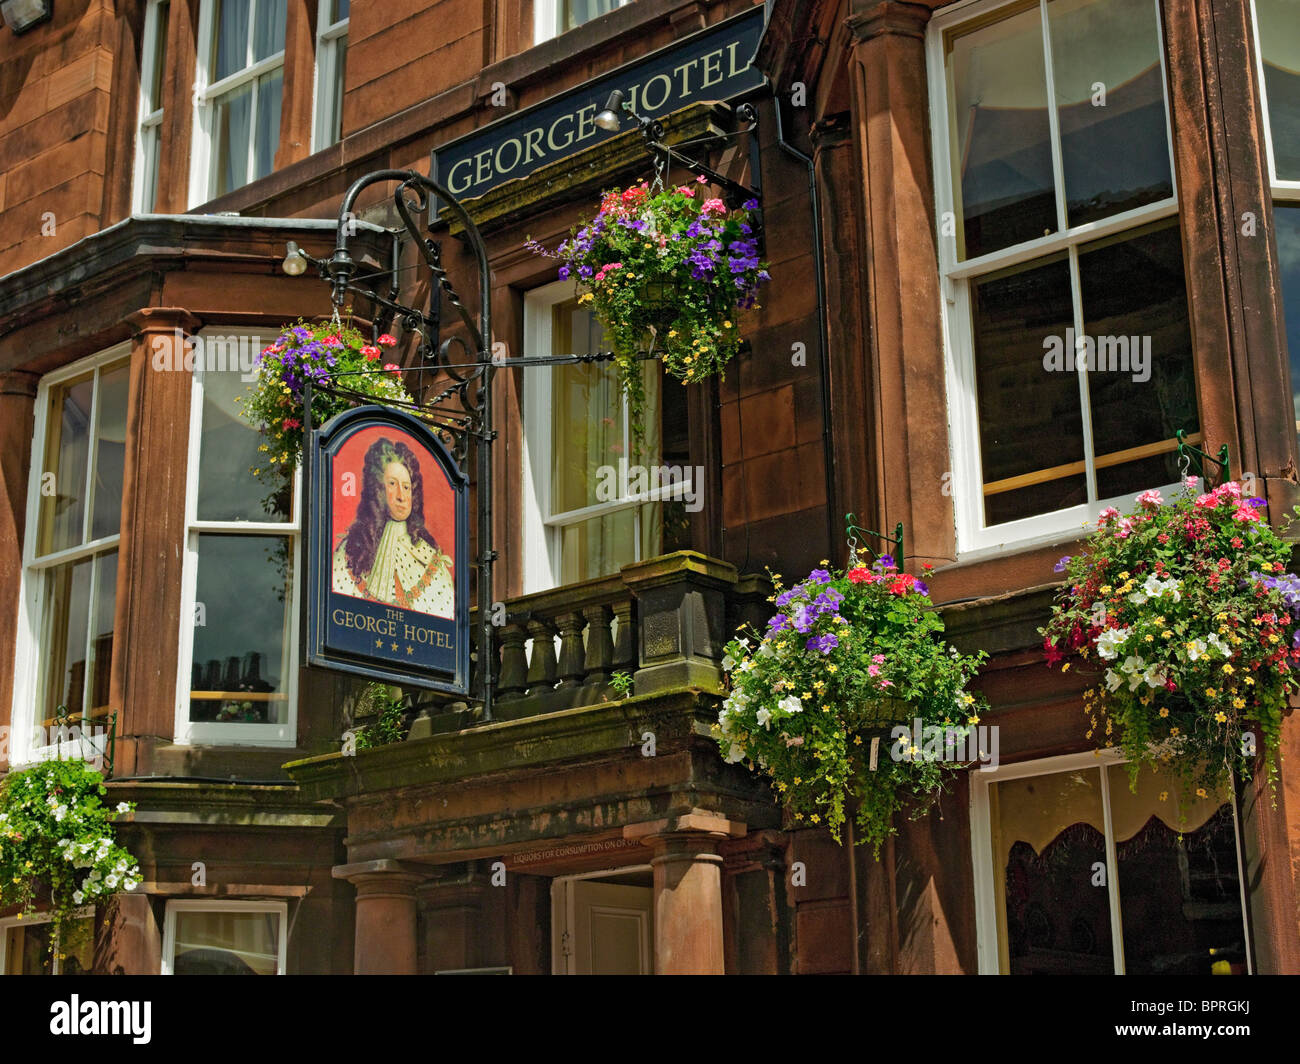 The George Hotel pub sign exterior in summer Penrith Cumbria England UK United Kingdom GB Great Britain Stock Photo